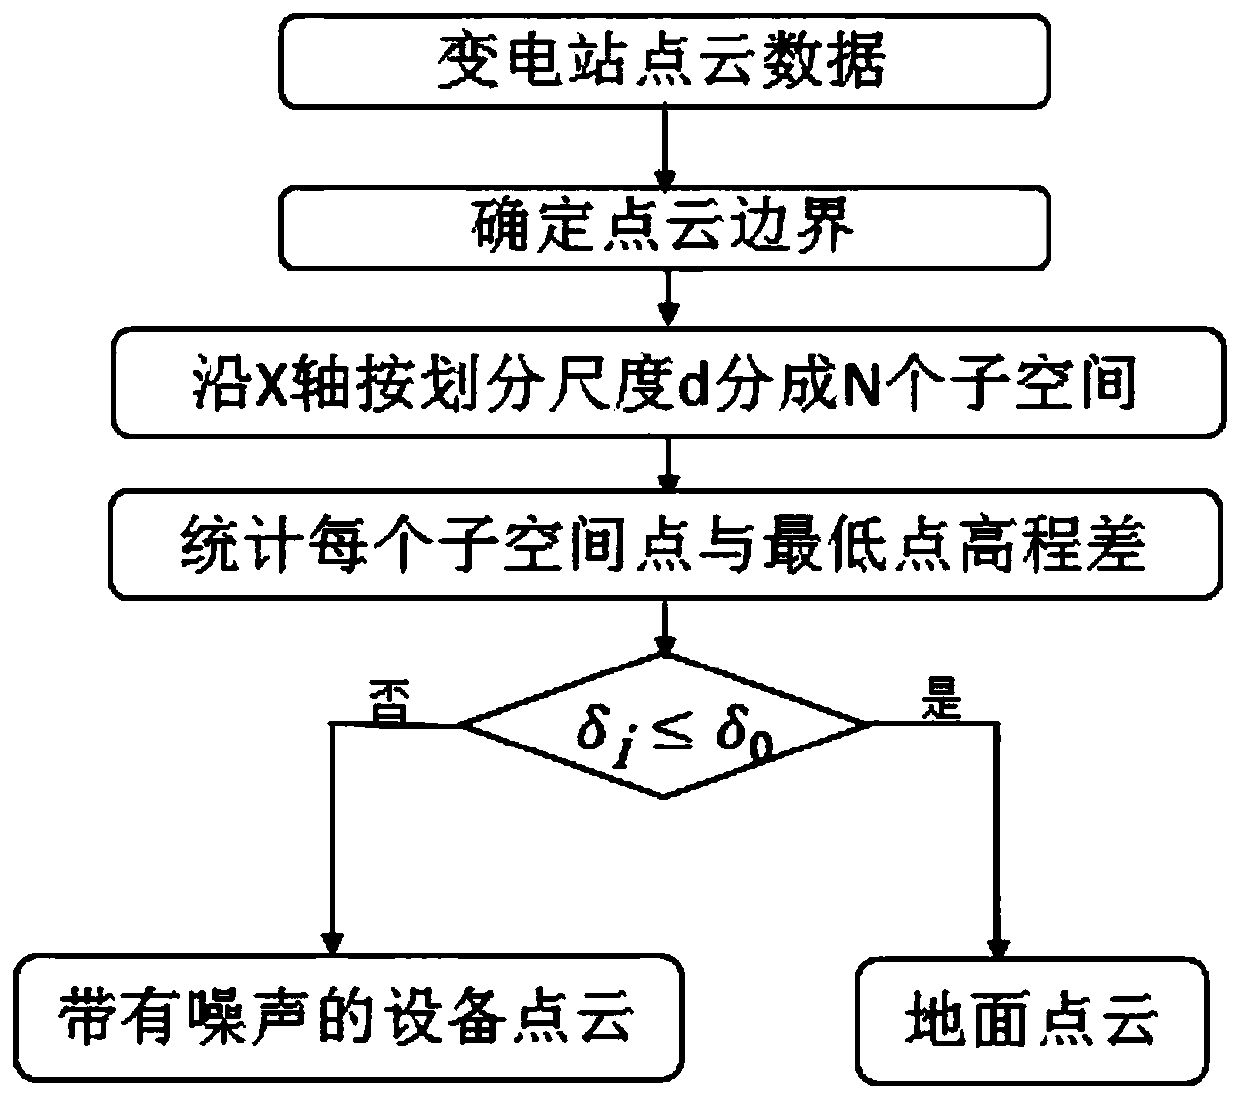 Substation three-dimensional live-action model establishing method and system